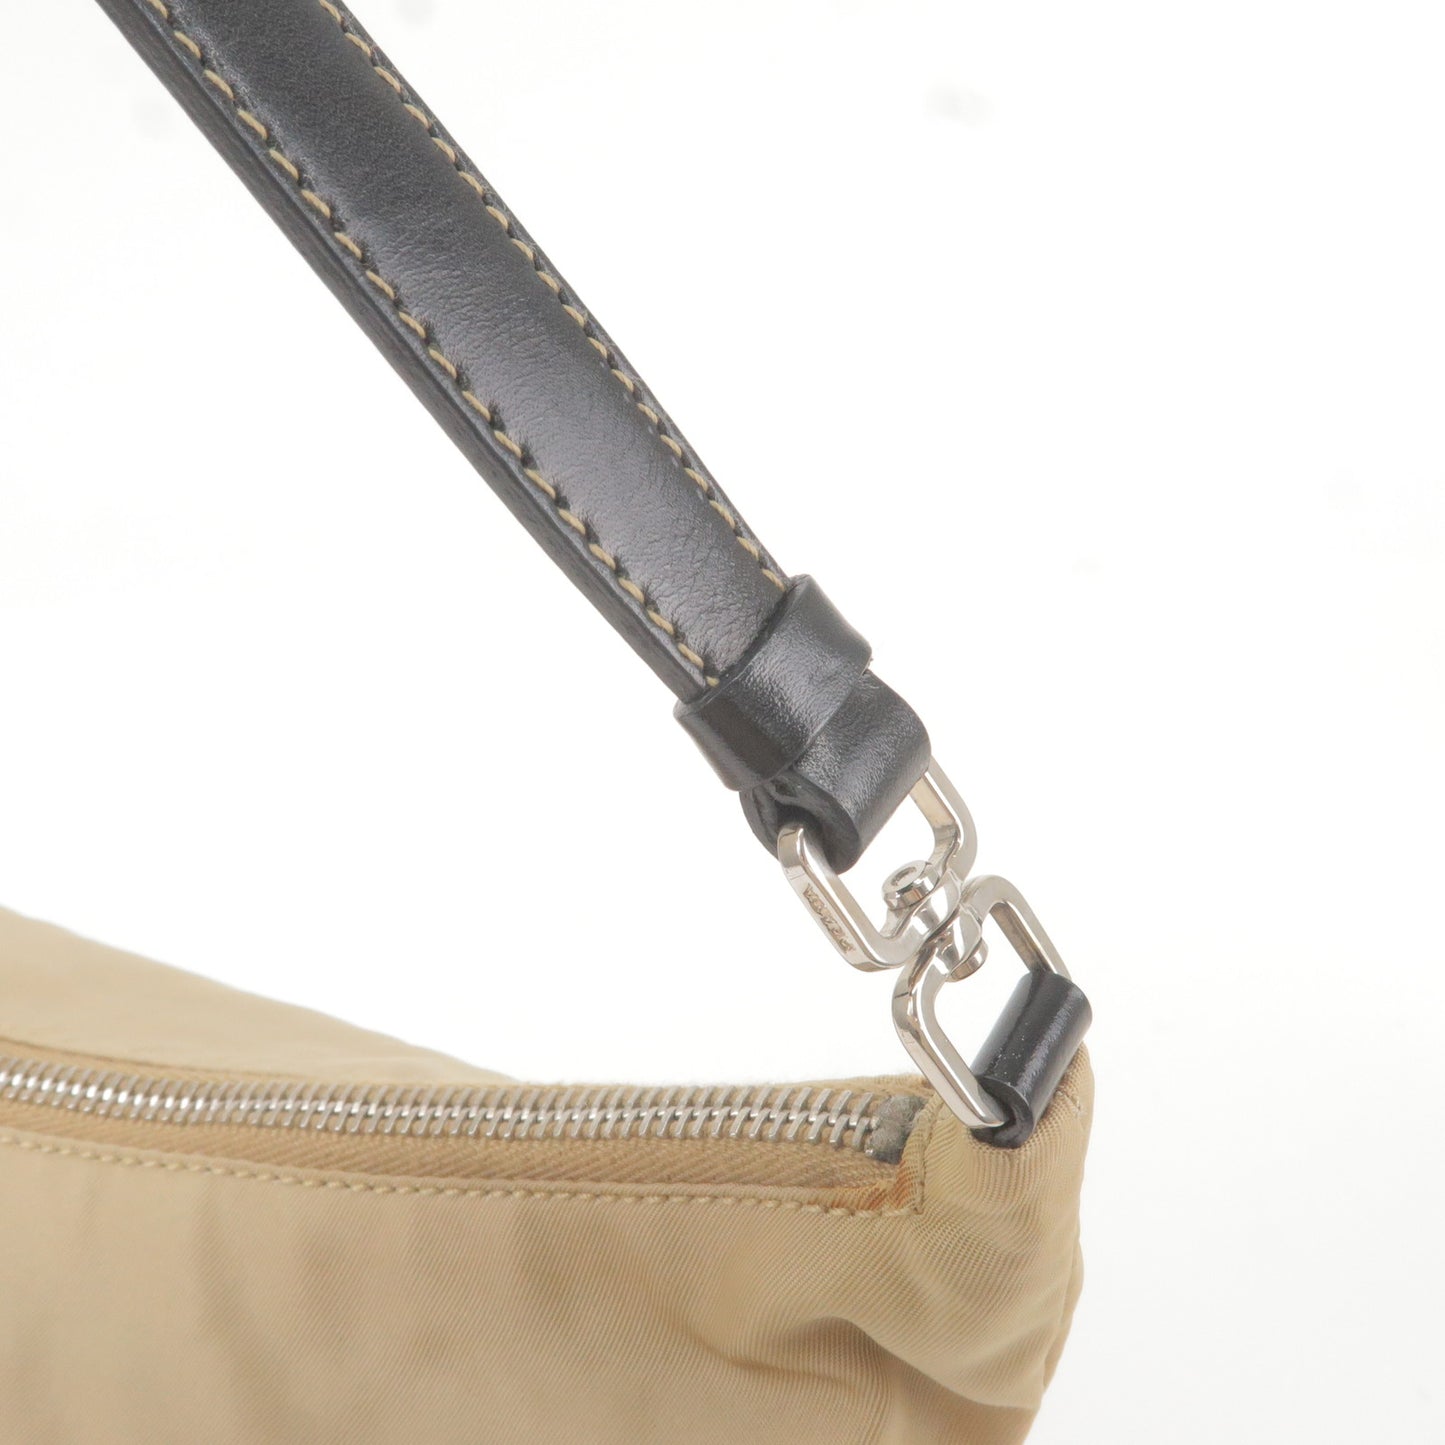 PRADA Nylon Leather Shoulder Bag Hand Bag Pouch Beige Black